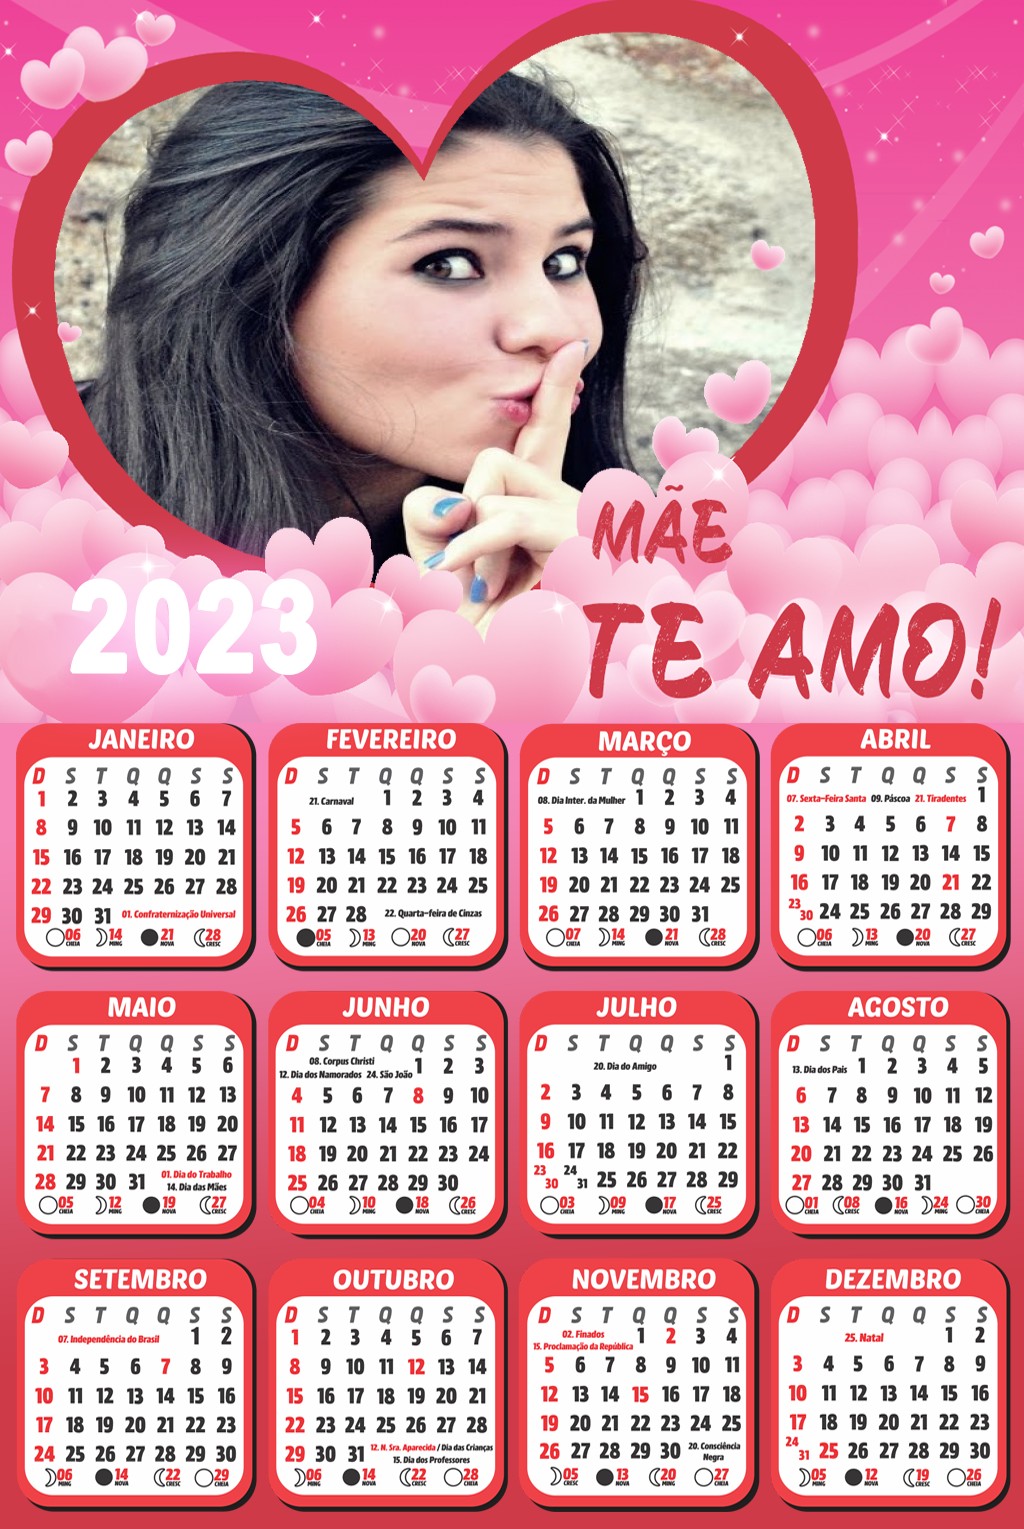 mae-te-amo-foto-calendario-2023